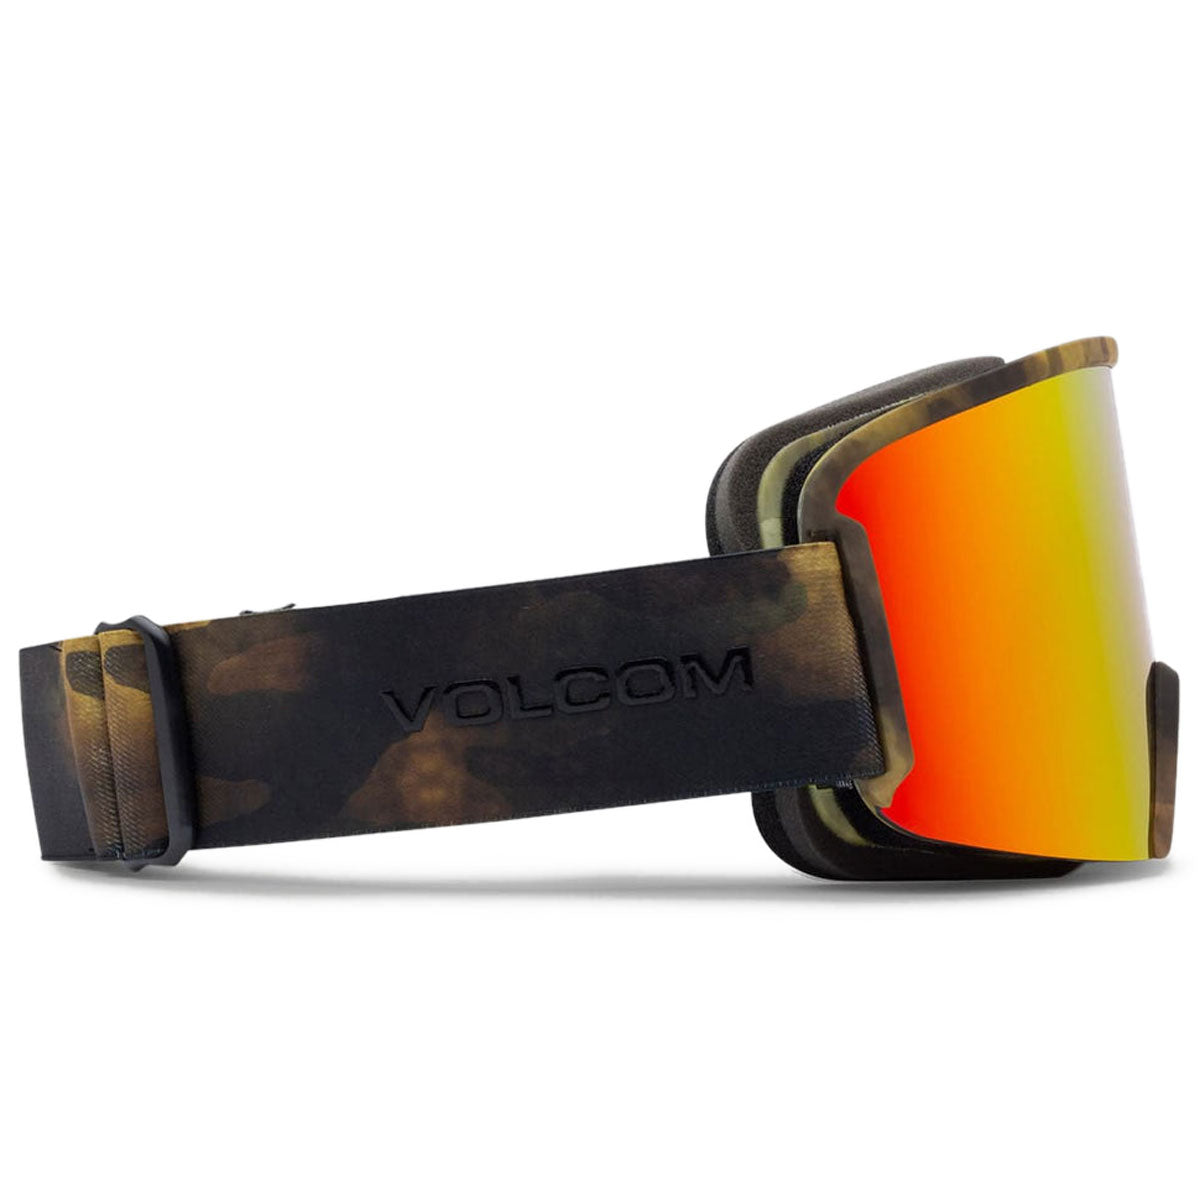 Volcom Garden Snowboard Goggles - Camo/Red Chrome image 2